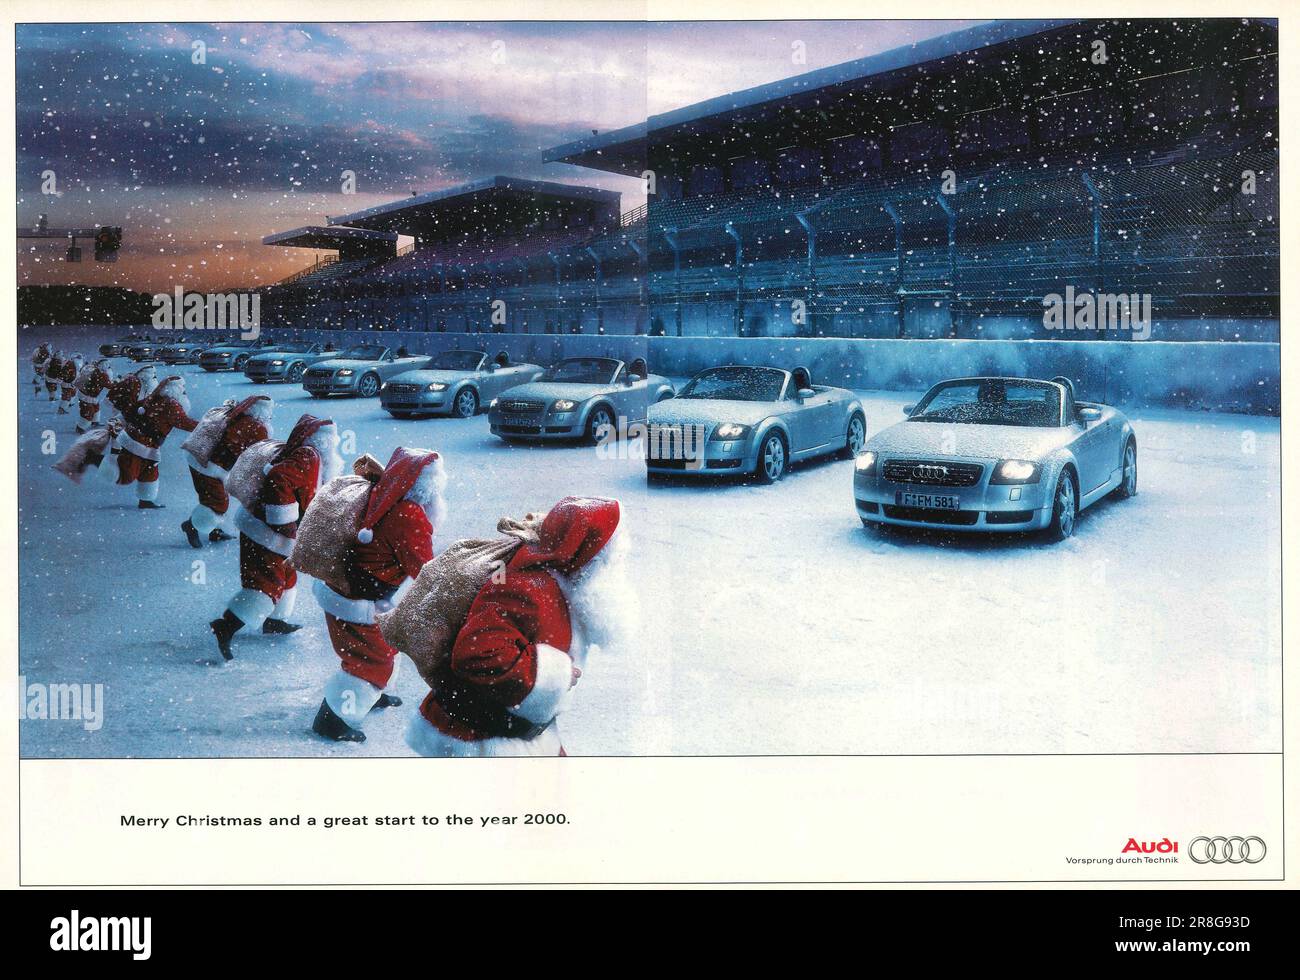 AUDI advert, Christmas AUDI advert  in a magazine 1999 Stock Photo